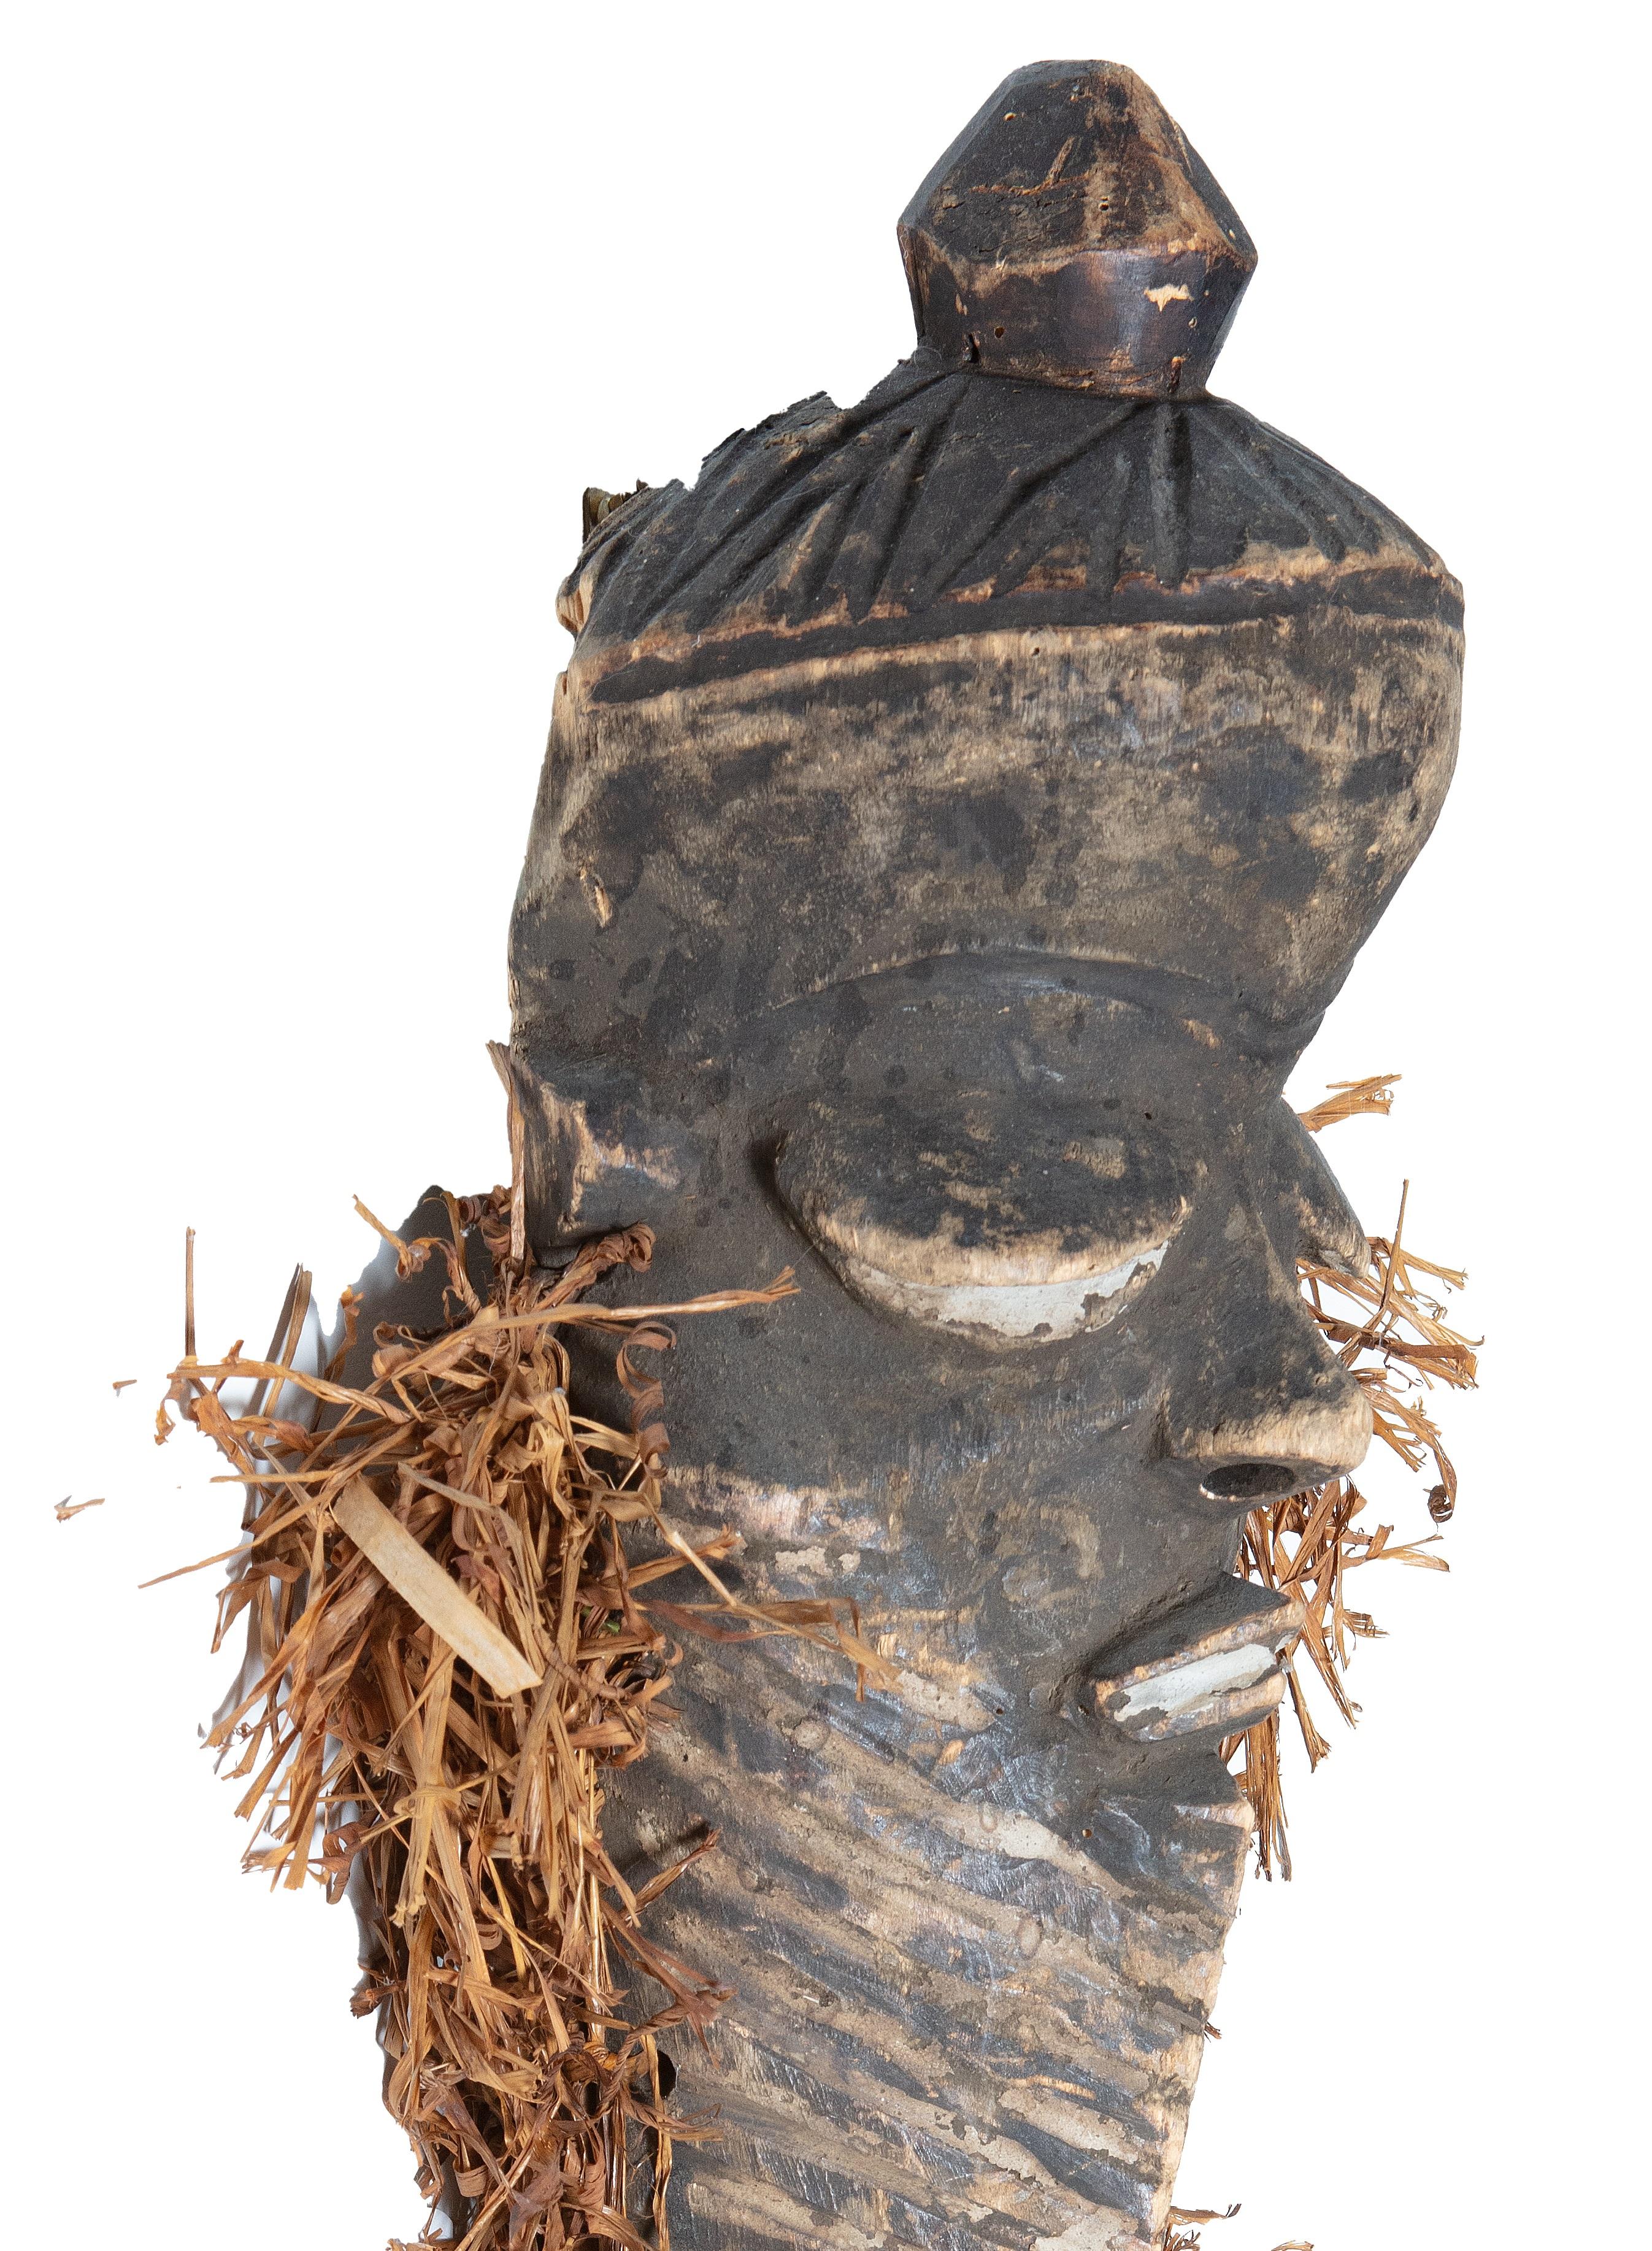 BaPende Female Wedding Mask-Zaire
Wood, raffia.
Made in Africa
21 1/2 x 5 1/4 x 4